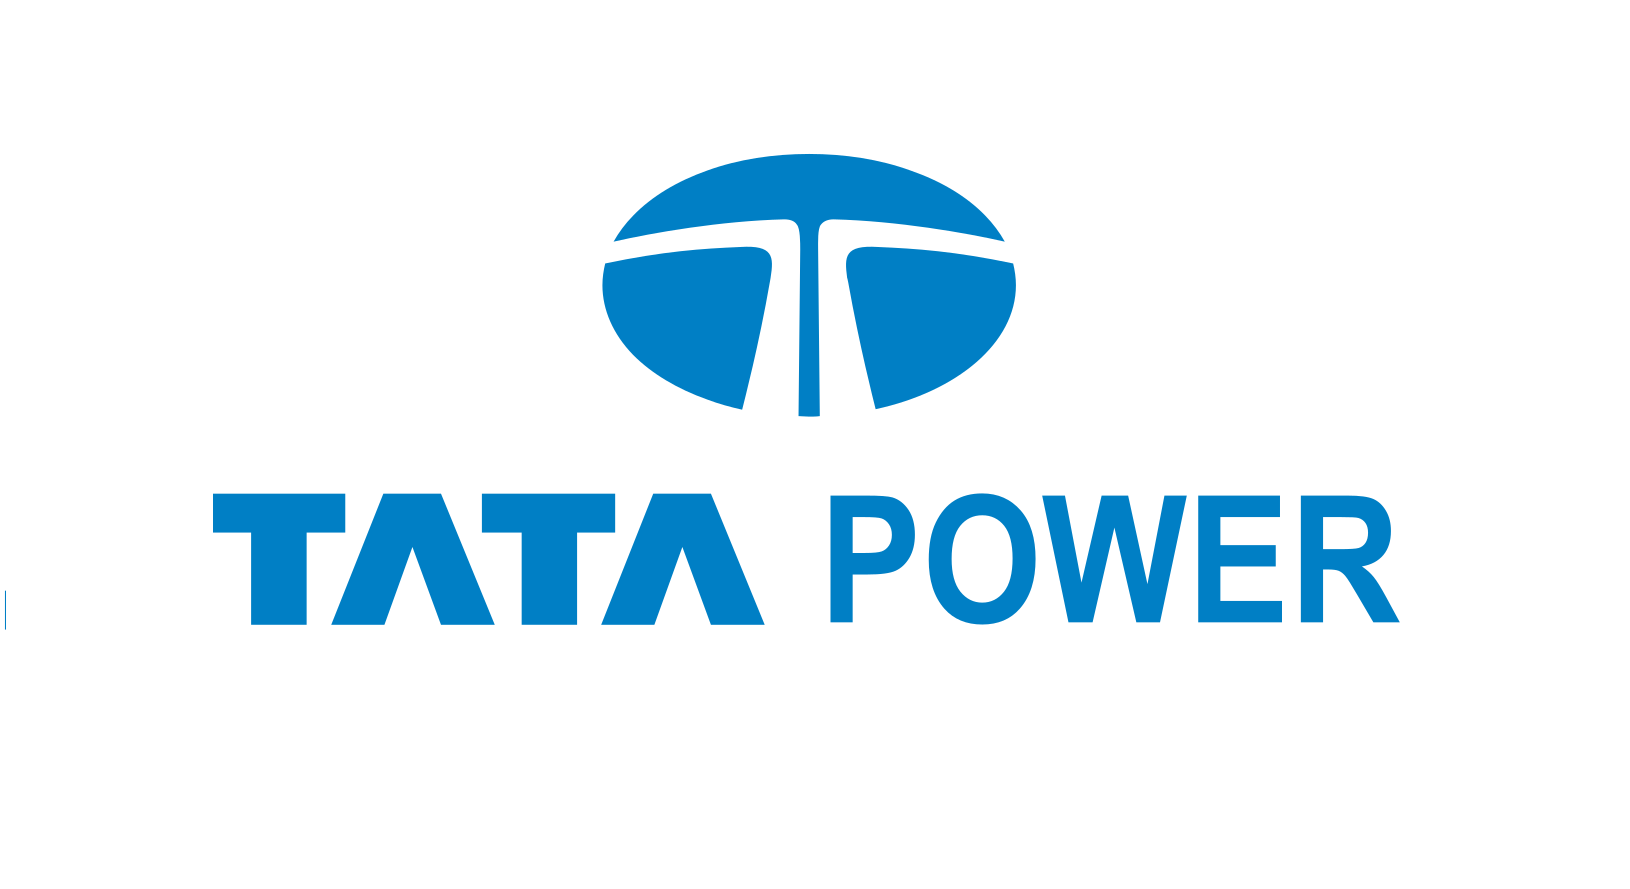 Tata Power Tanks 7%, Hits Multi-Month Lows; CLSA Downgrades Stock on 'Weak' Q4